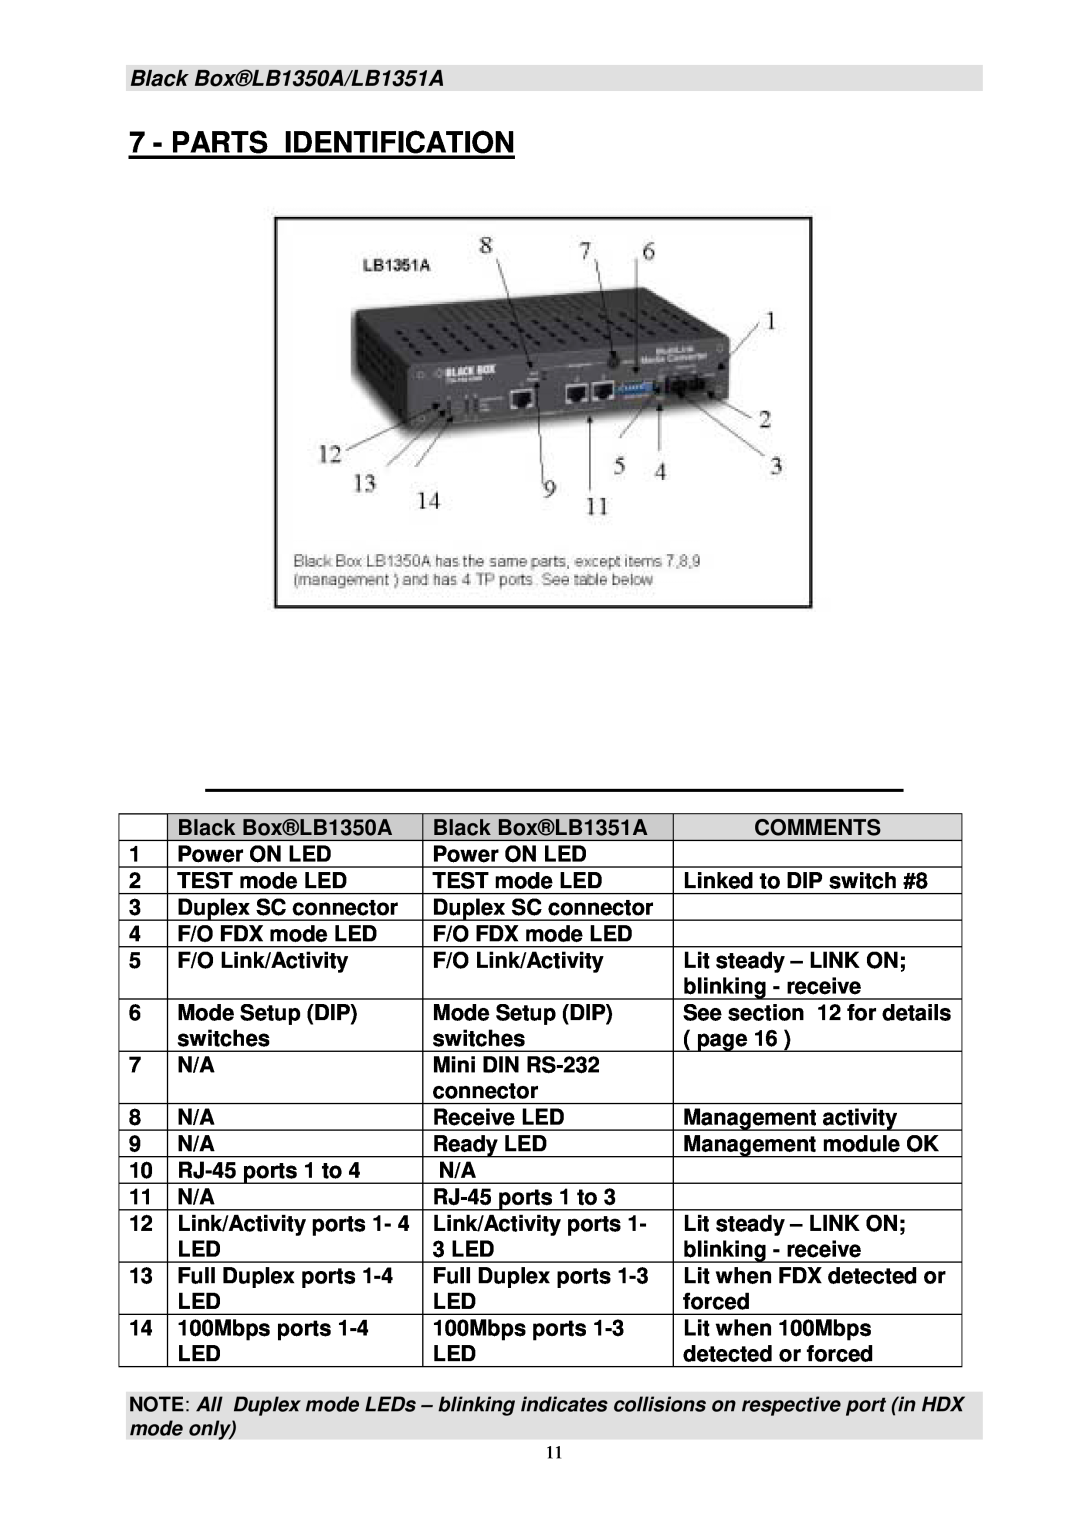 Black Box Parts Identification, Black BoxLB1350A/LB1351A, Black BoxLB1351A, Comments, Power ON LED, TEST mode LED, page 